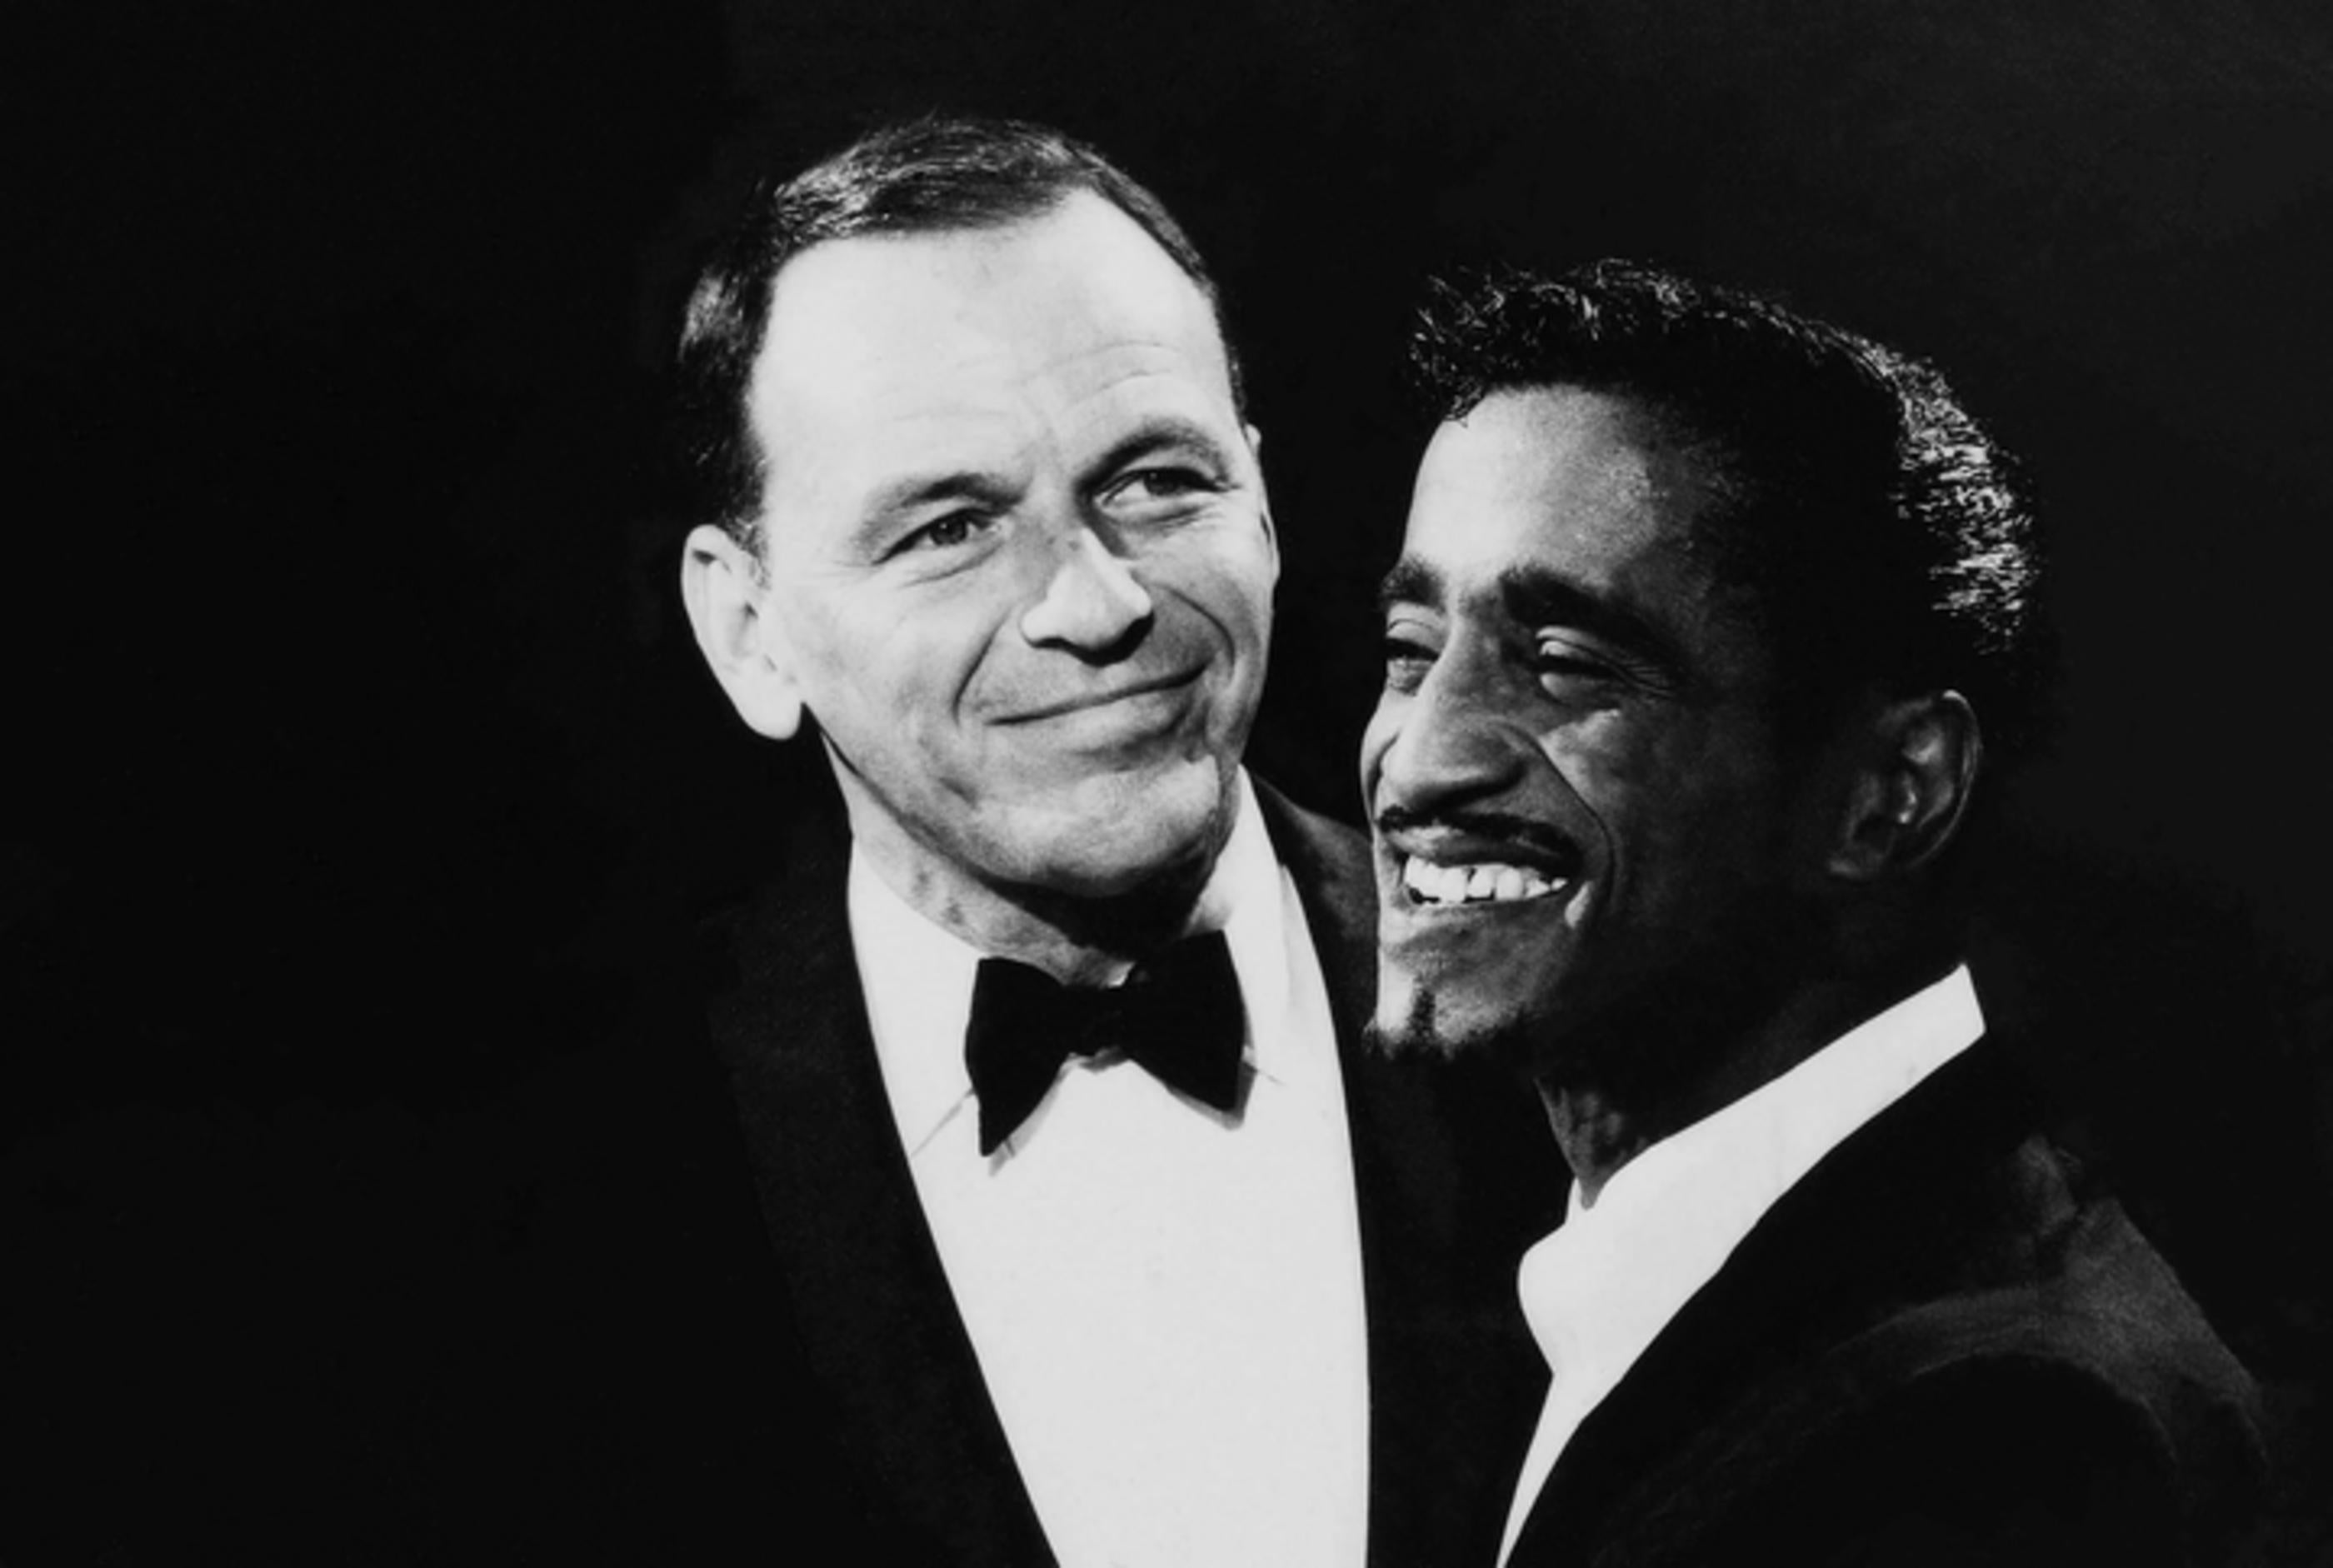 Frank Sinatra and Sammy Davis Jr. Smiling 20" x 16" Edition of 125